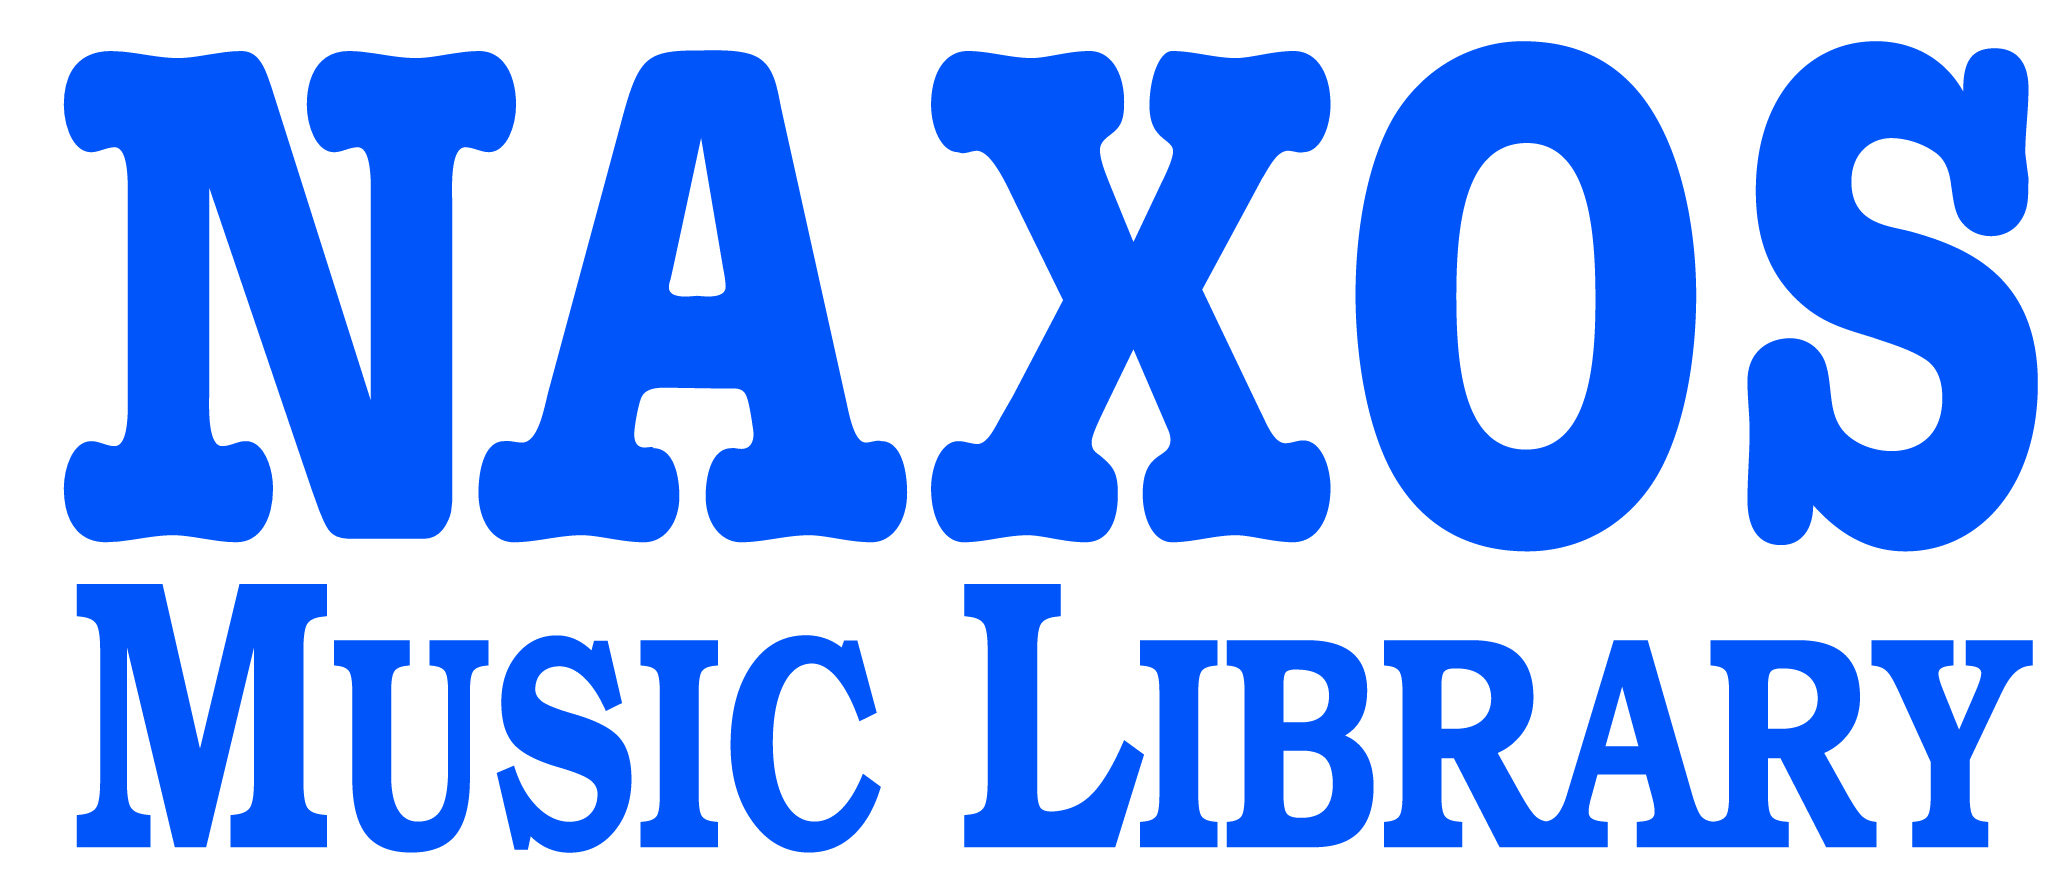 Audio_tinhte_Naxos_Music_library.jpg